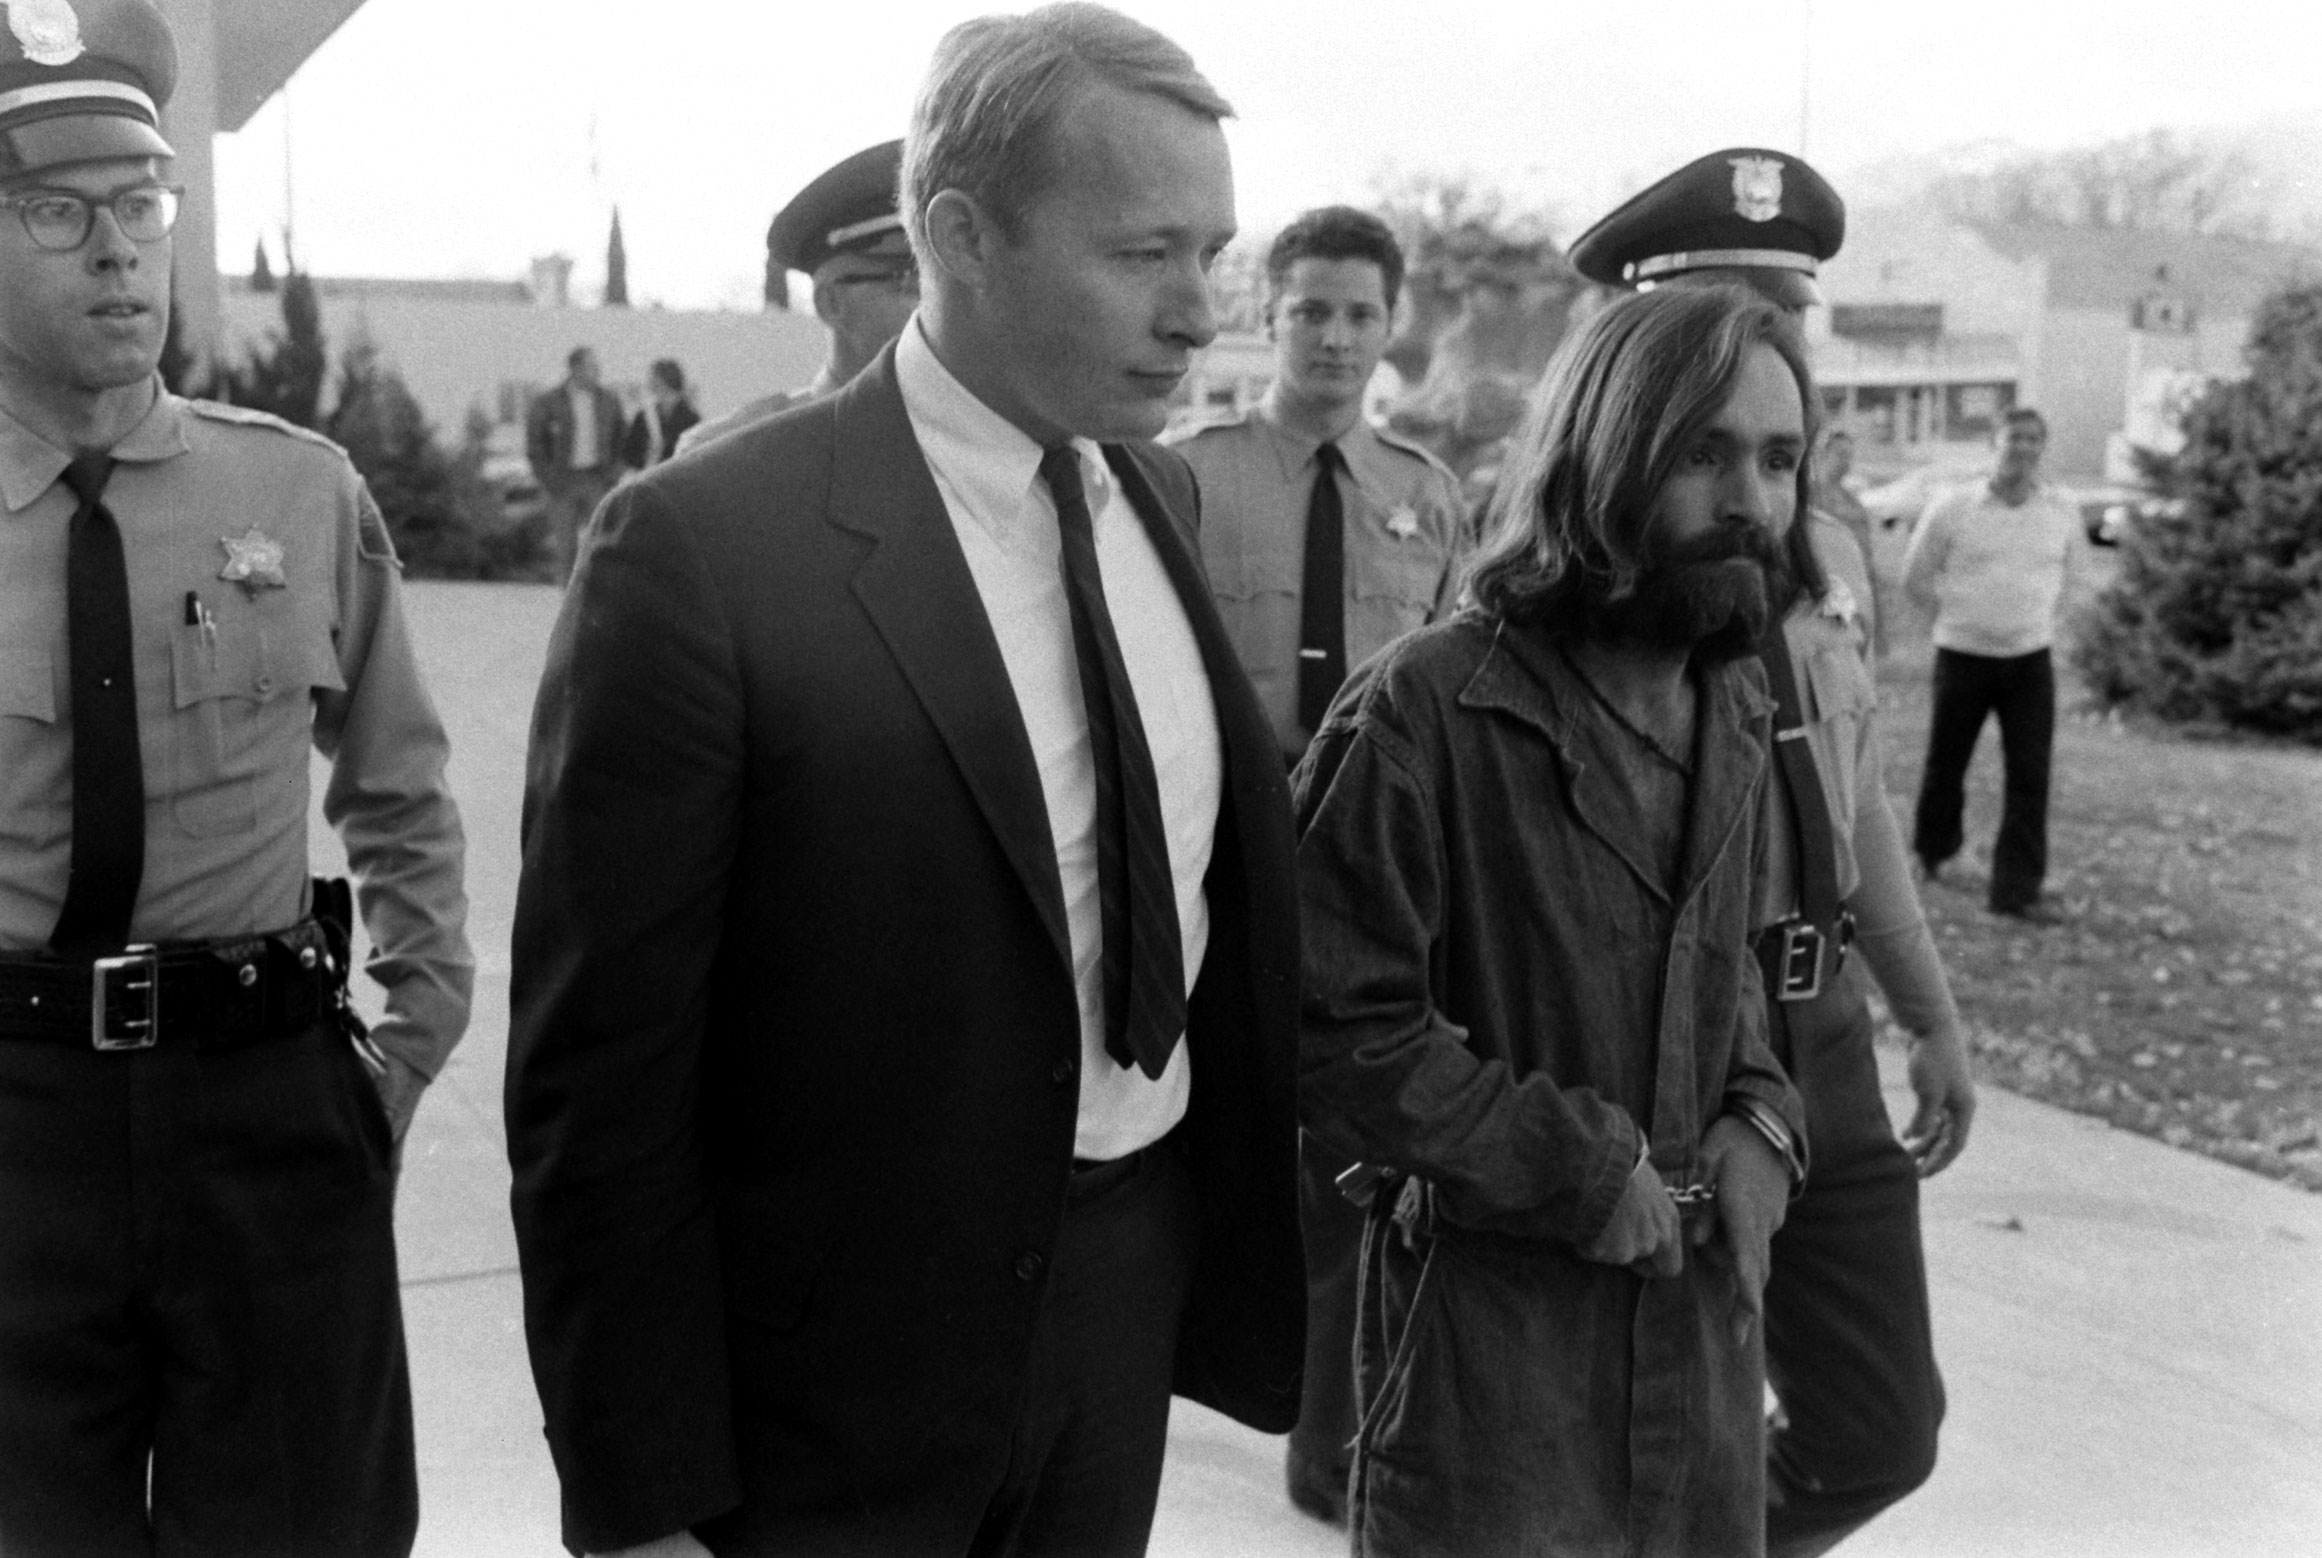 Charles Manson in custody, 1969.